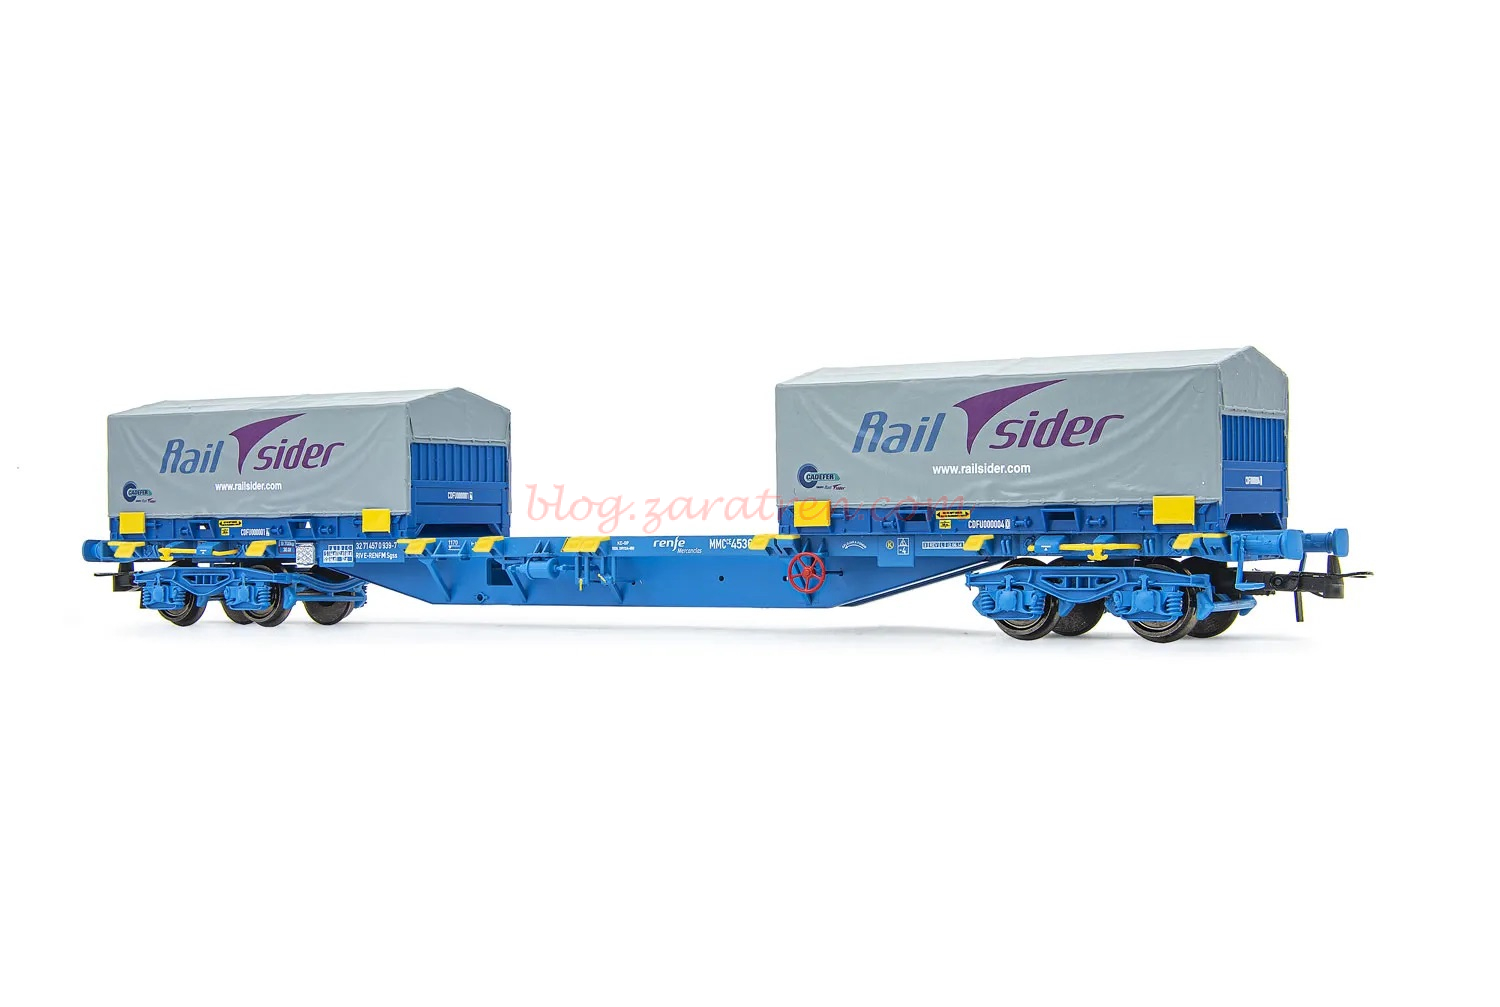 Electrotren – Vagón plataforma, Tipo MMC3, RENFE, Color Azul, Cont. Cadefer/Railsider, Epoca VI, Escala H0, Ref: HE6063